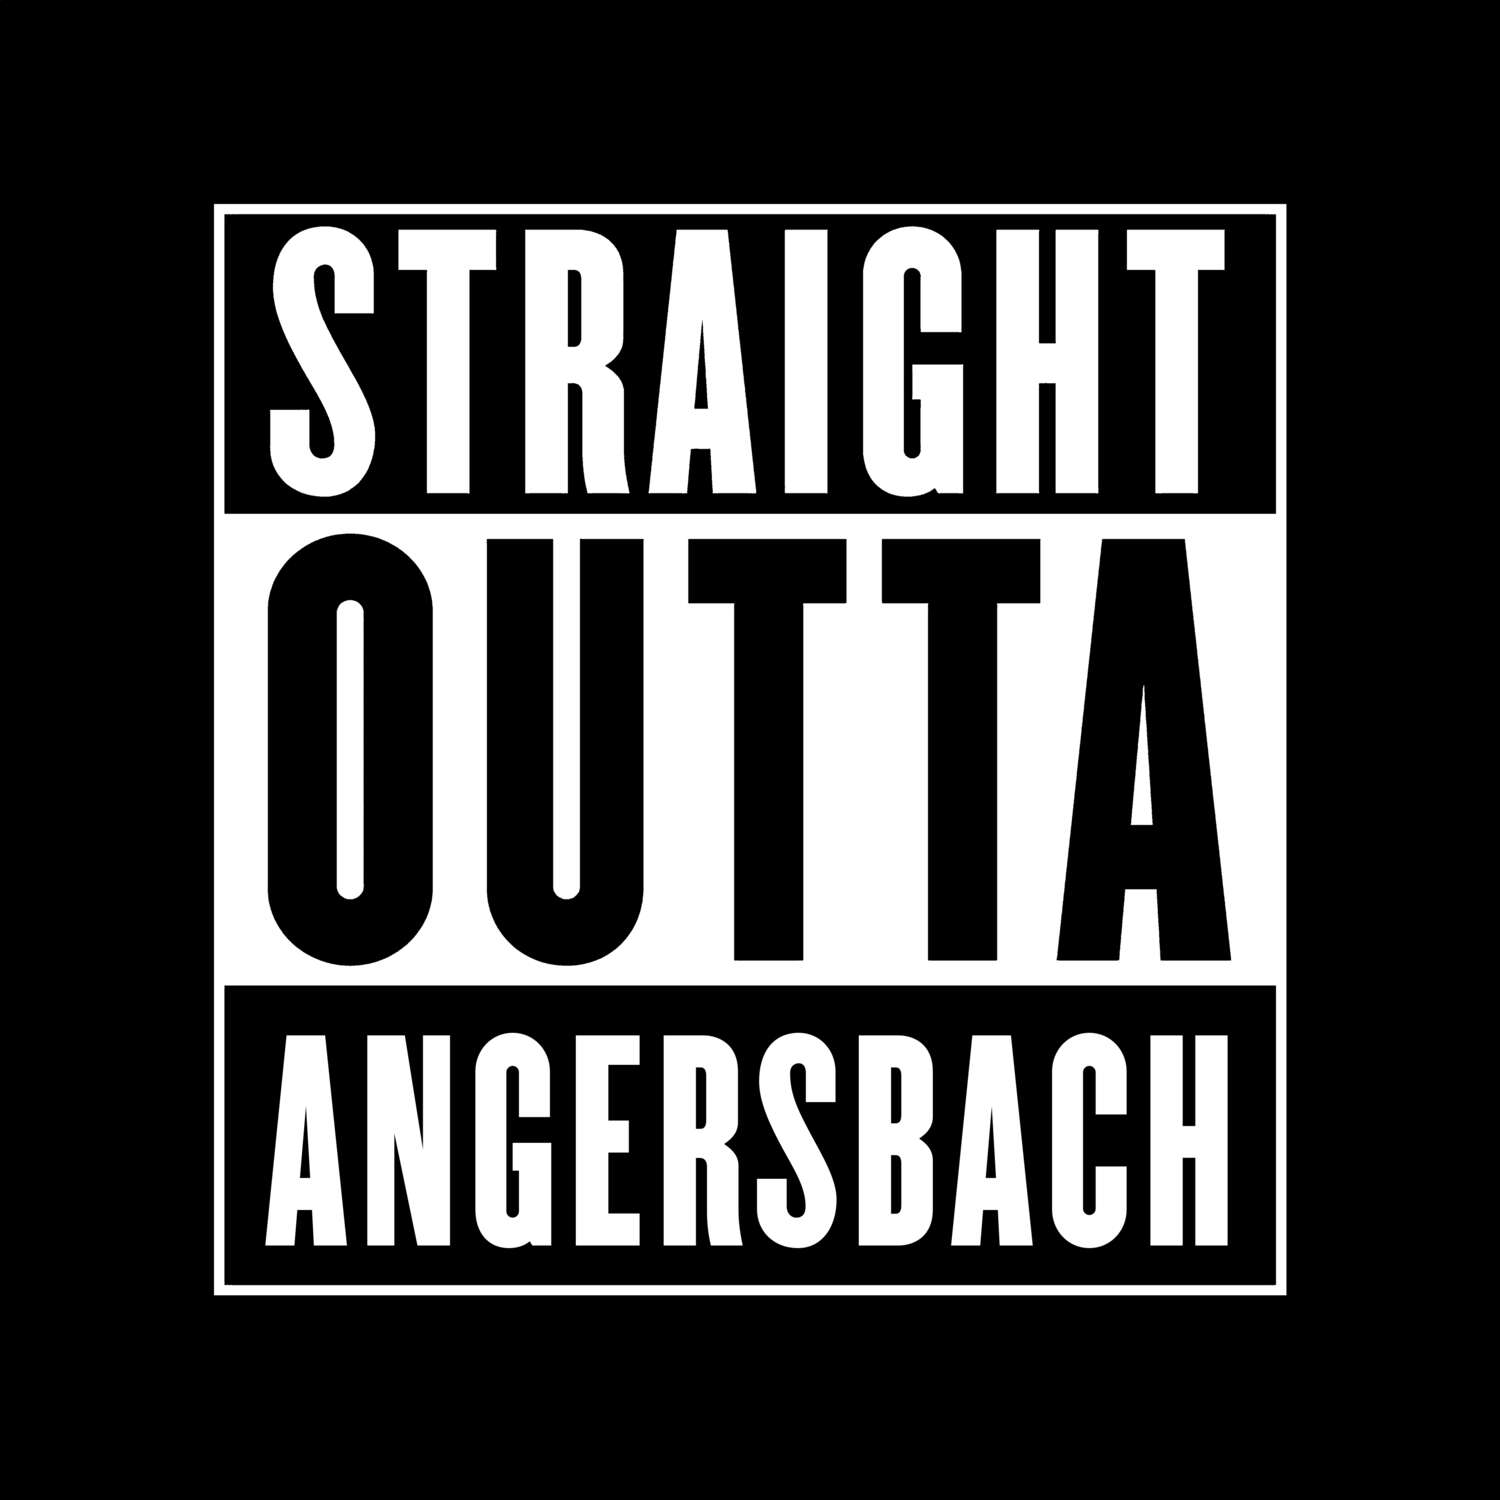 Angersbach T-Shirt »Straight Outta«